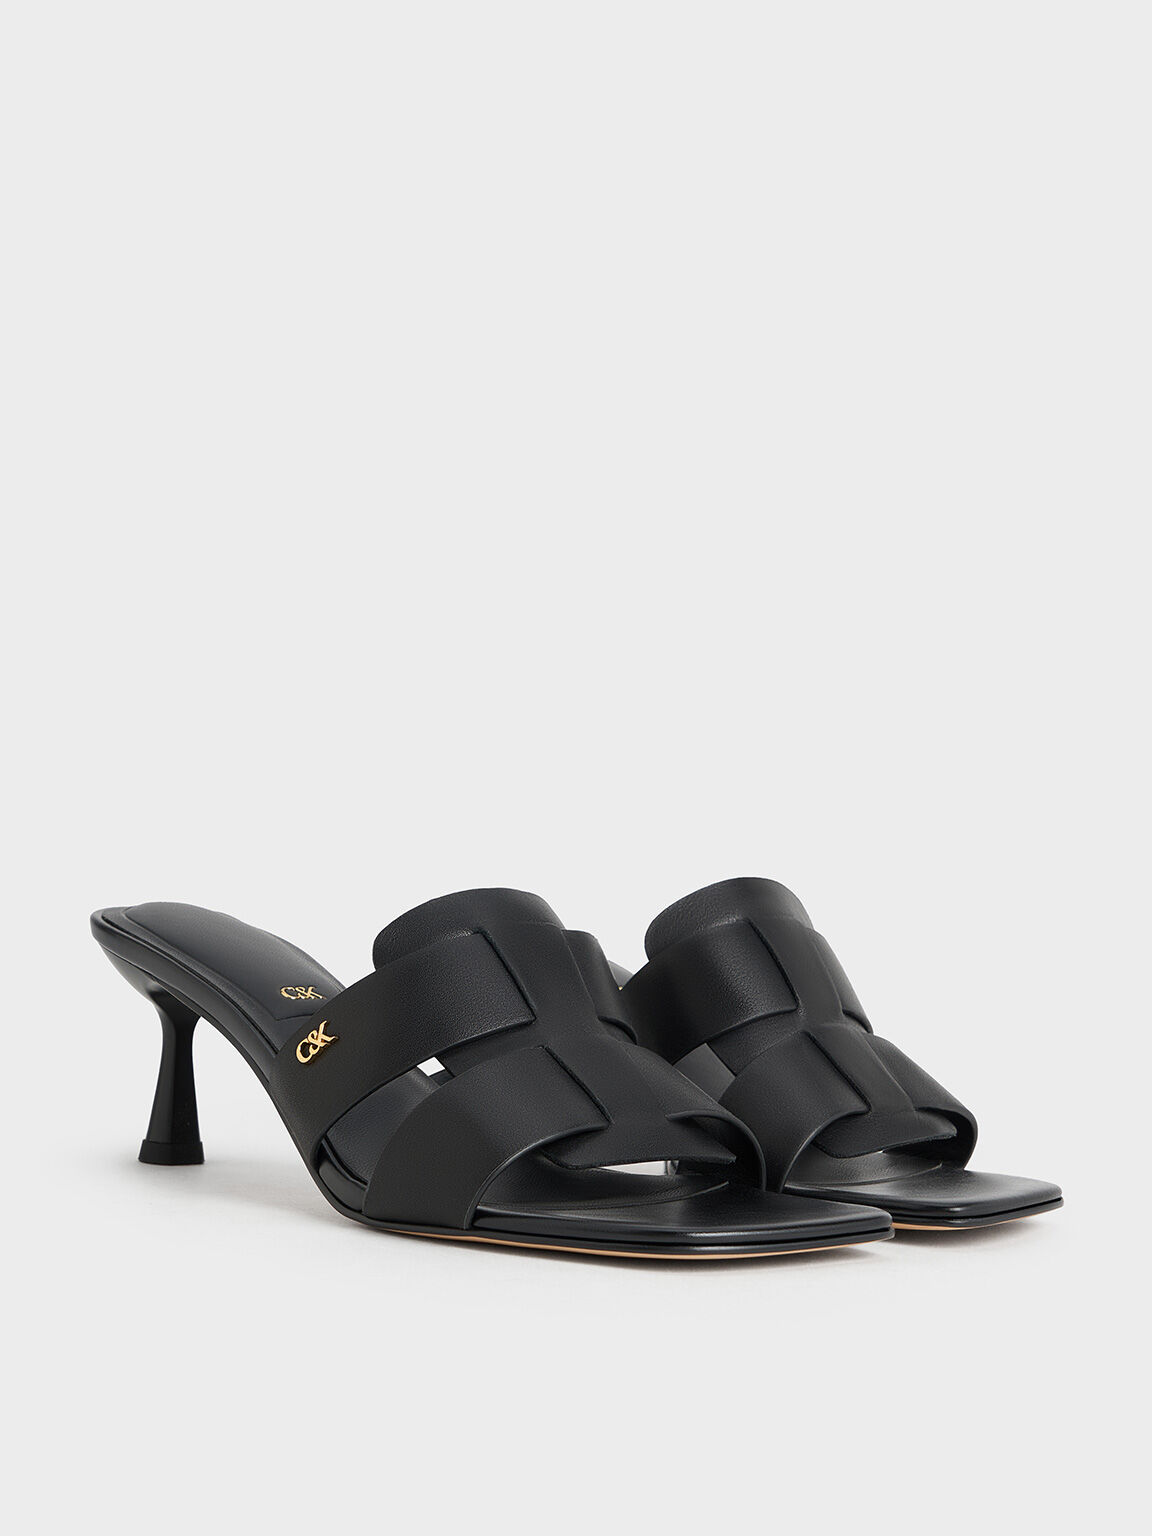 Sepatu Mules Spool Heel Interwoven Leather Trichelle, Black, hi-res